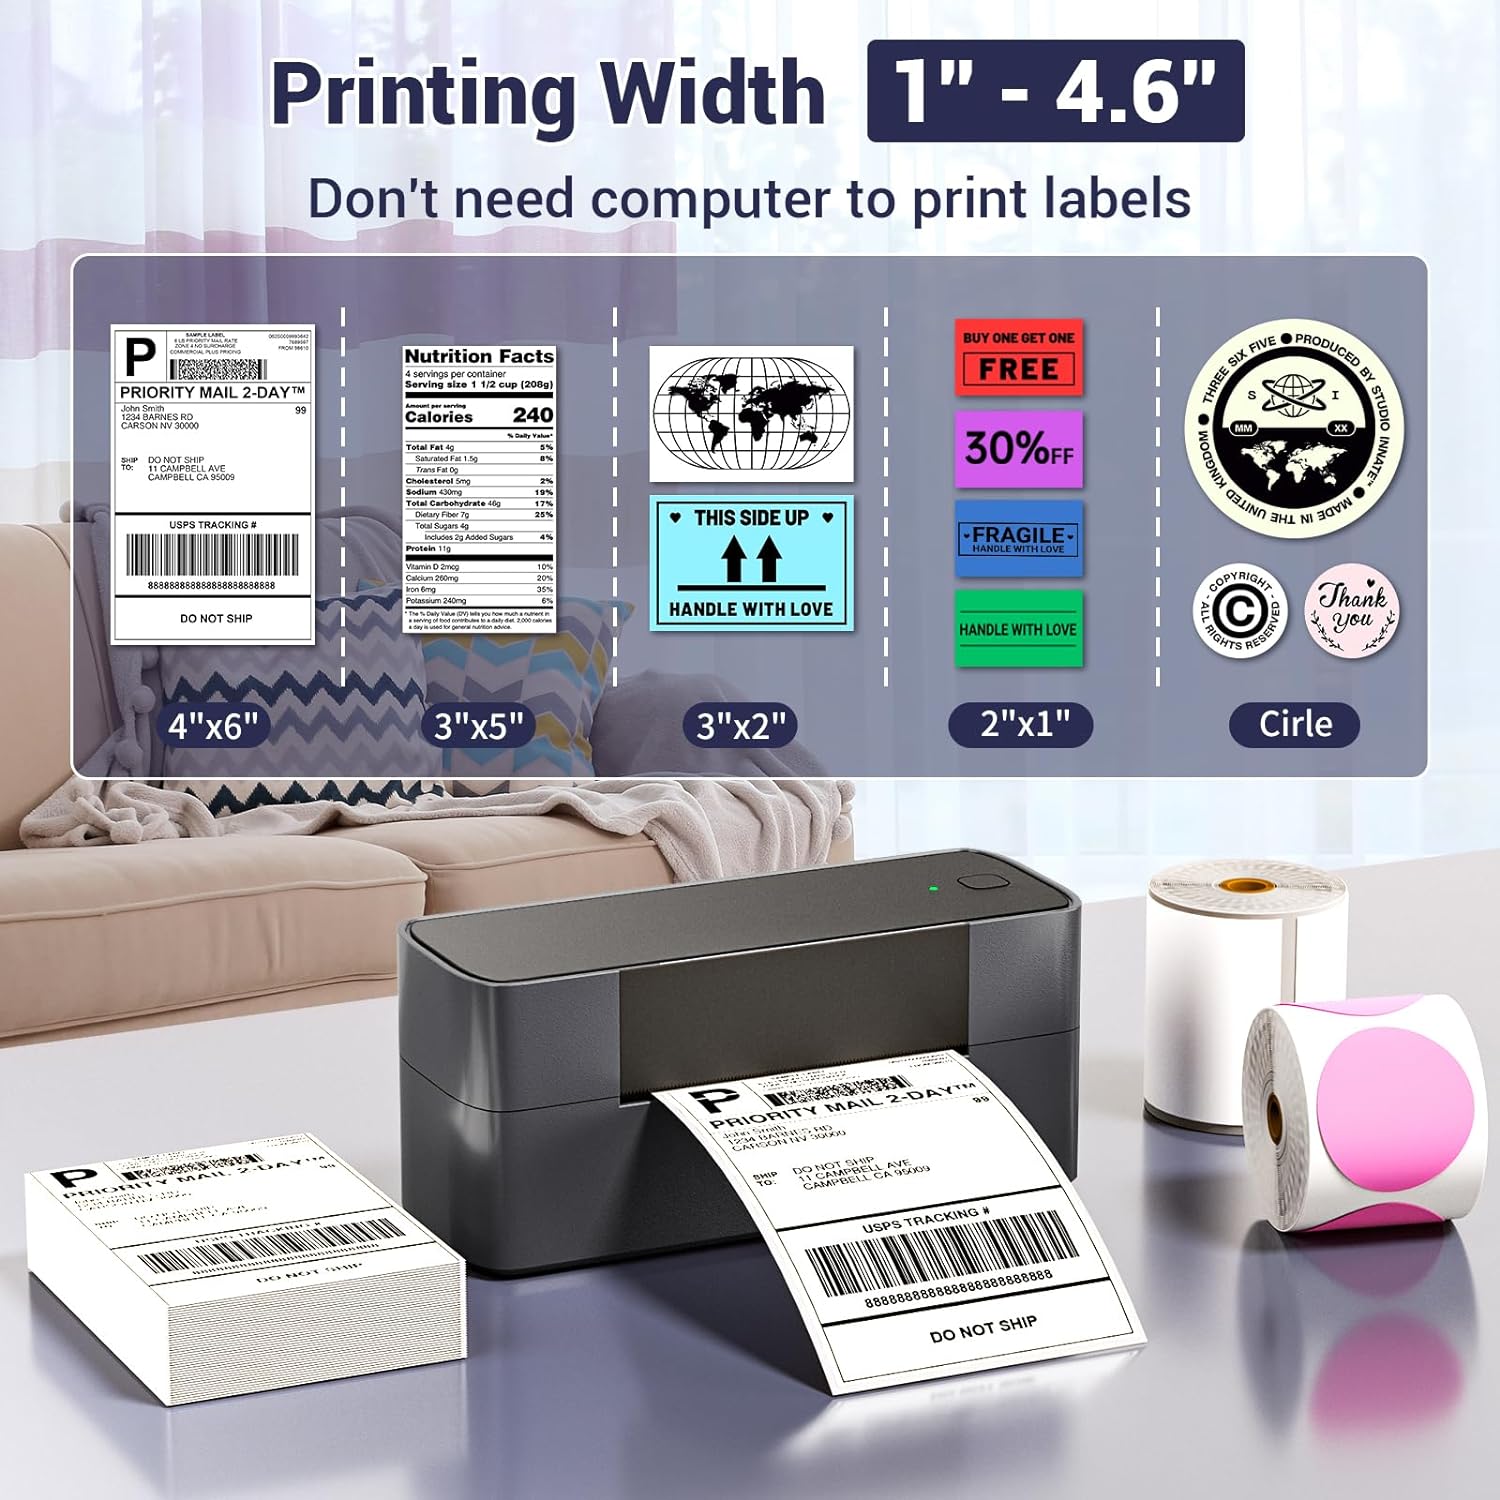 Phomemo PM-245-BTZ Thermal Shipping Label Printer